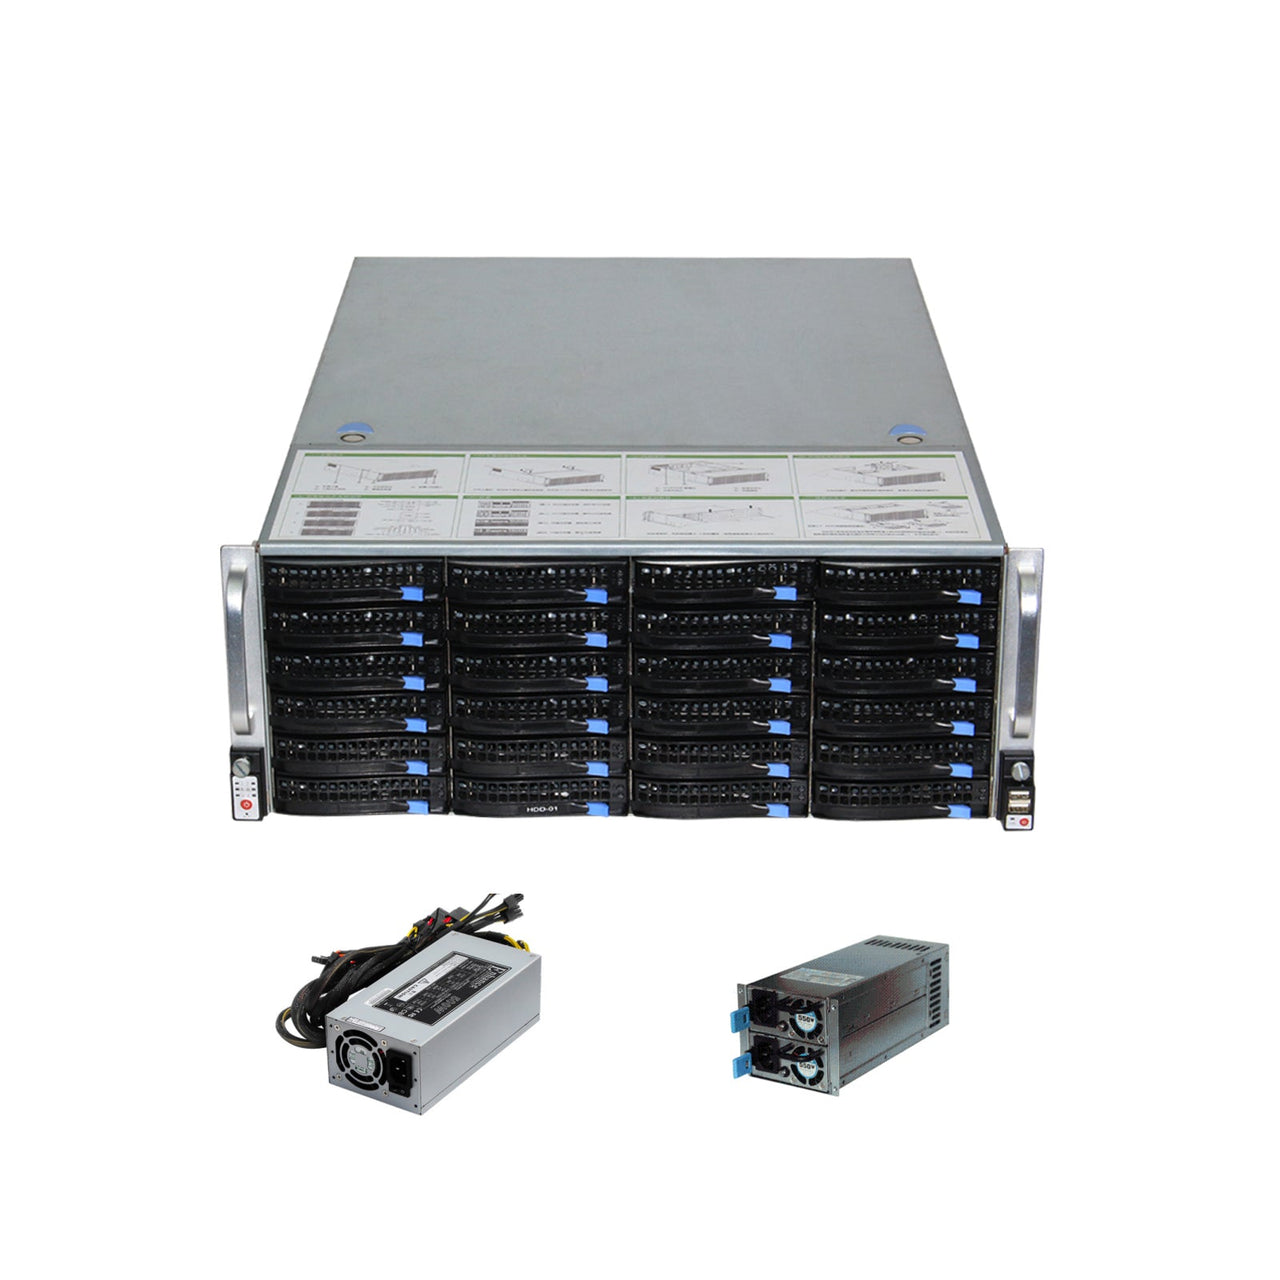 JideTech X86 Super NVR, Centralized Storage Management Device Support 128pcs Cameras Input(NVSS8724-128-R)